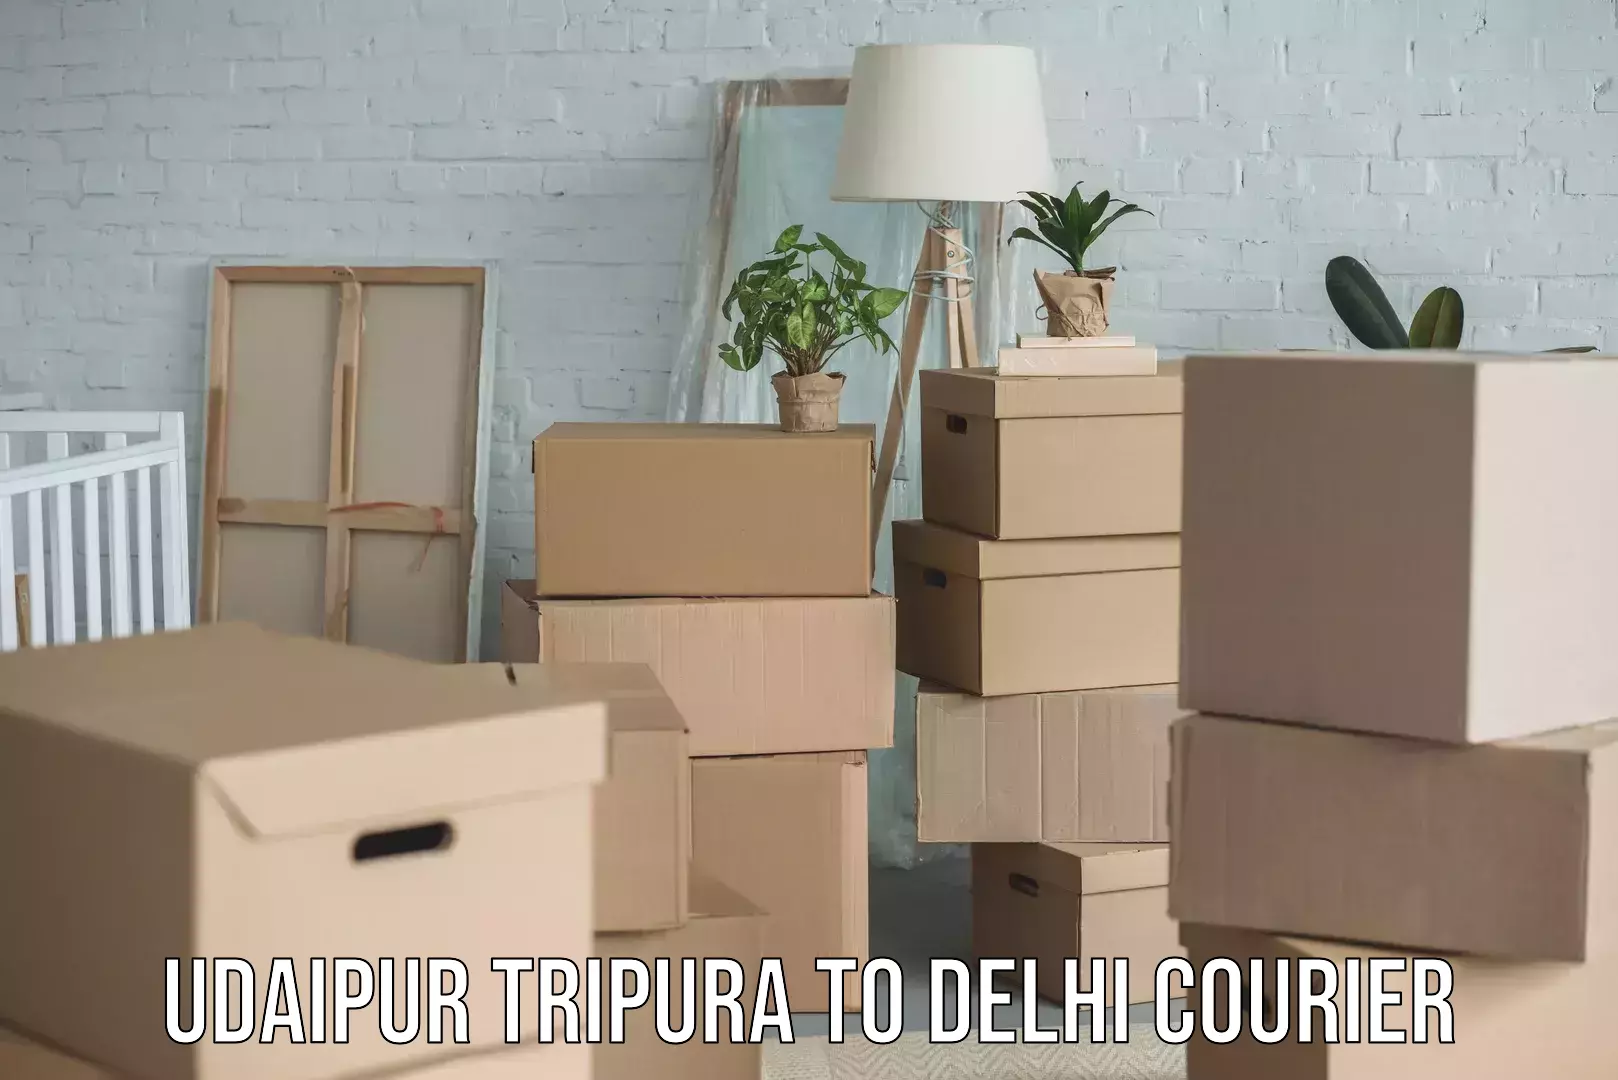 User-friendly delivery service in Udaipur Tripura to Delhi